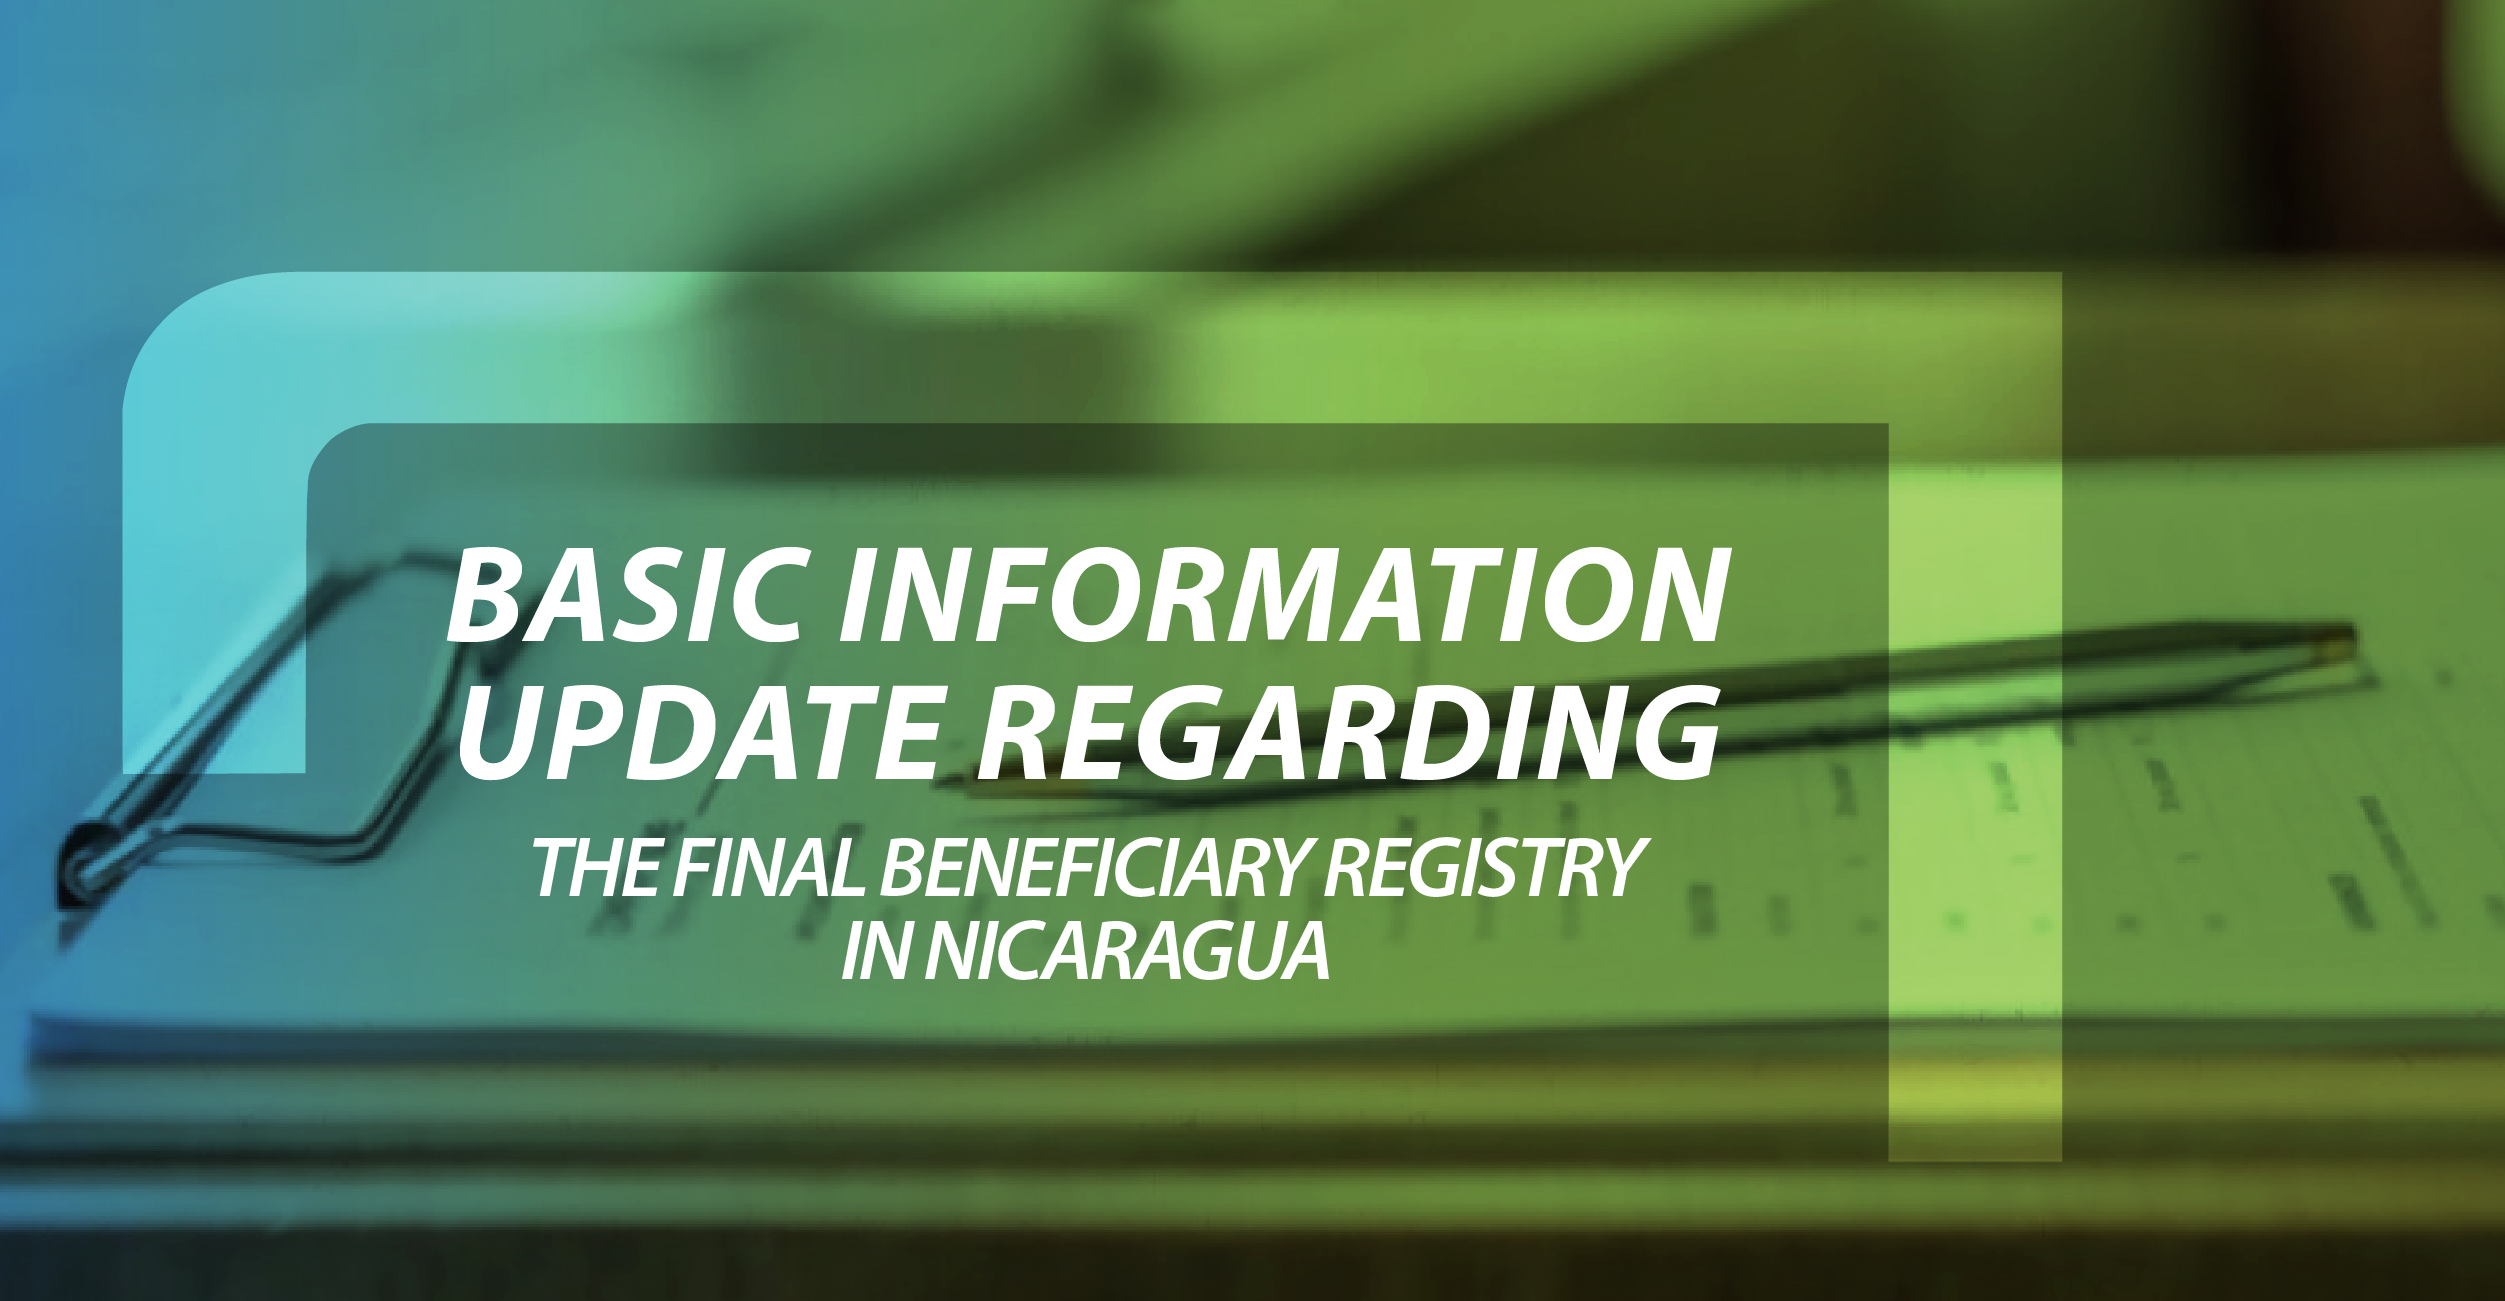 Update regarding the Final Beneficiary Registry in Nicaragua.